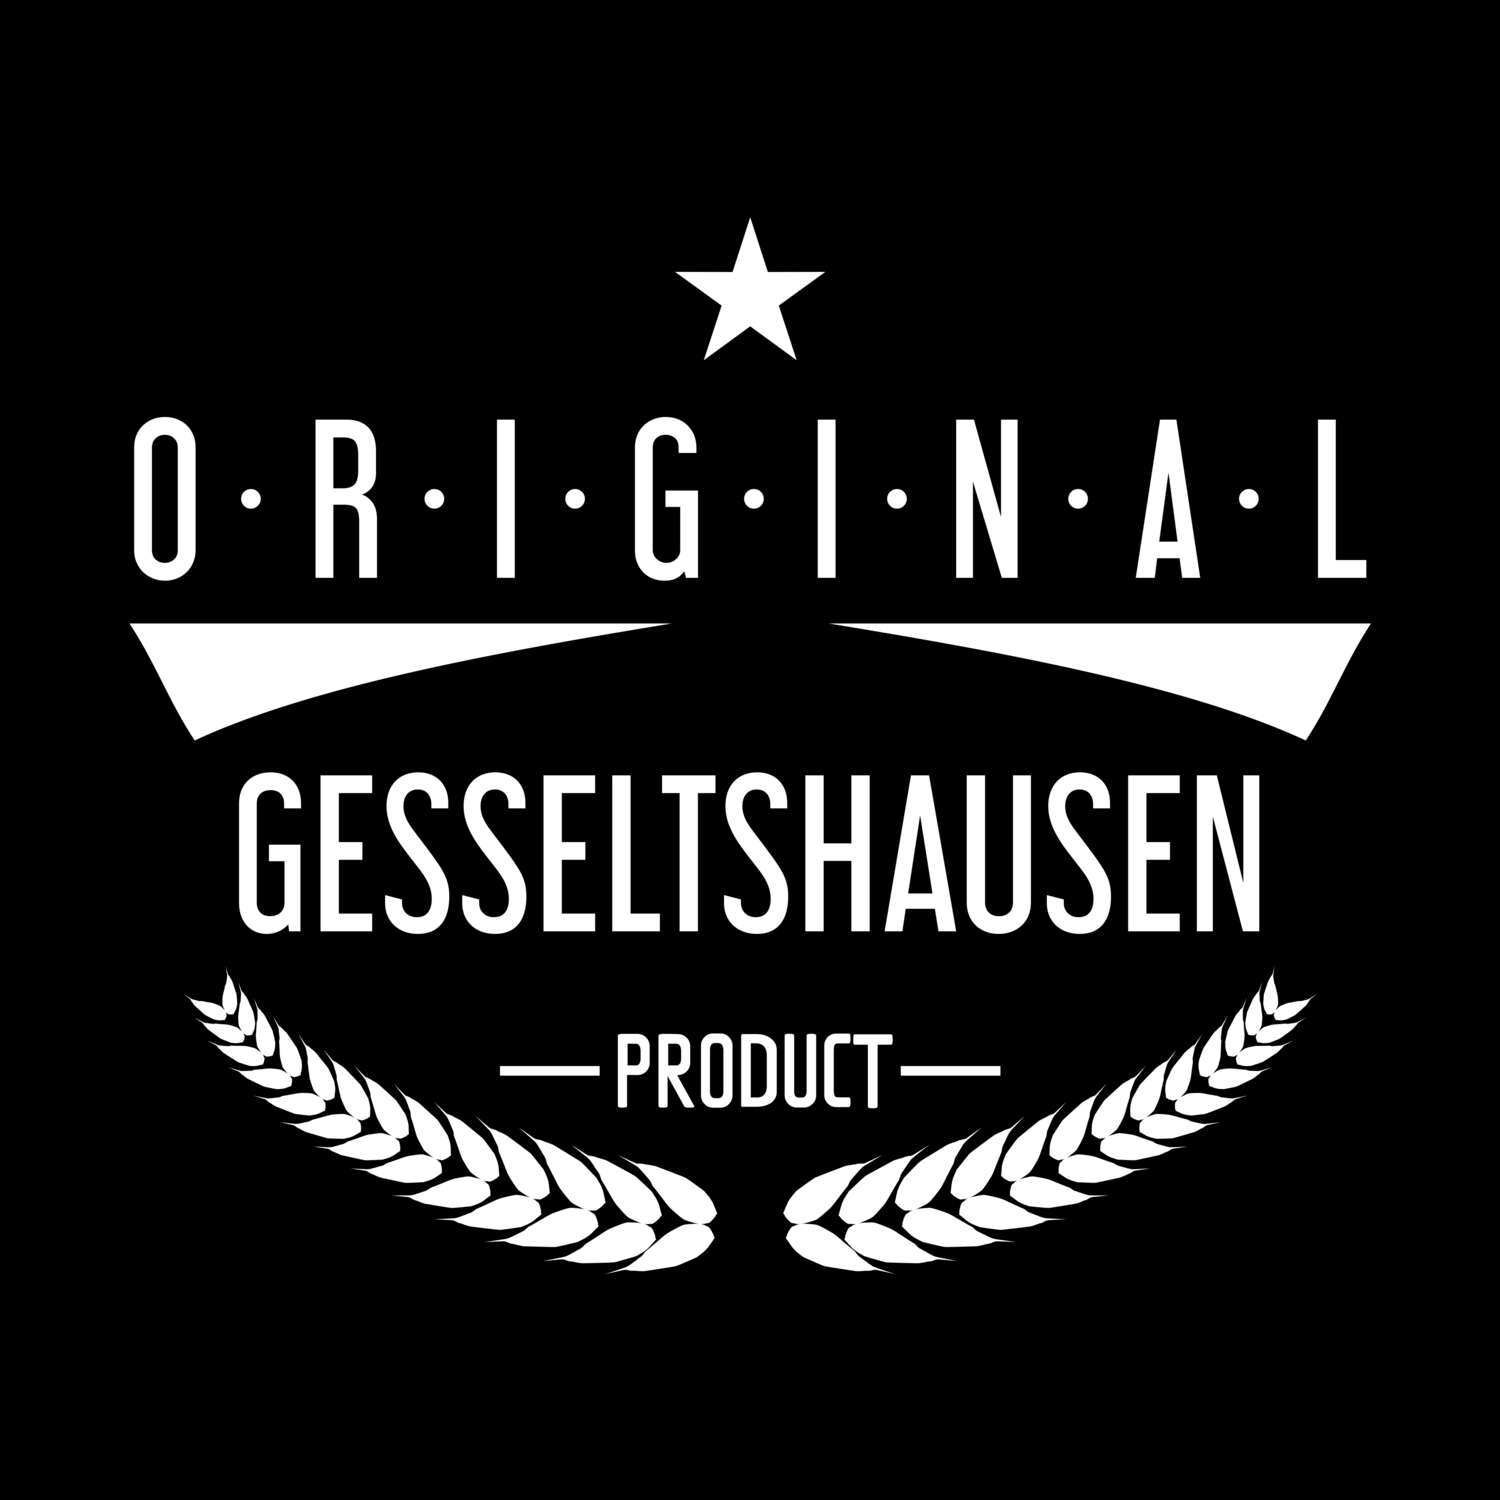 Gesseltshausen T-Shirt »Original Product«